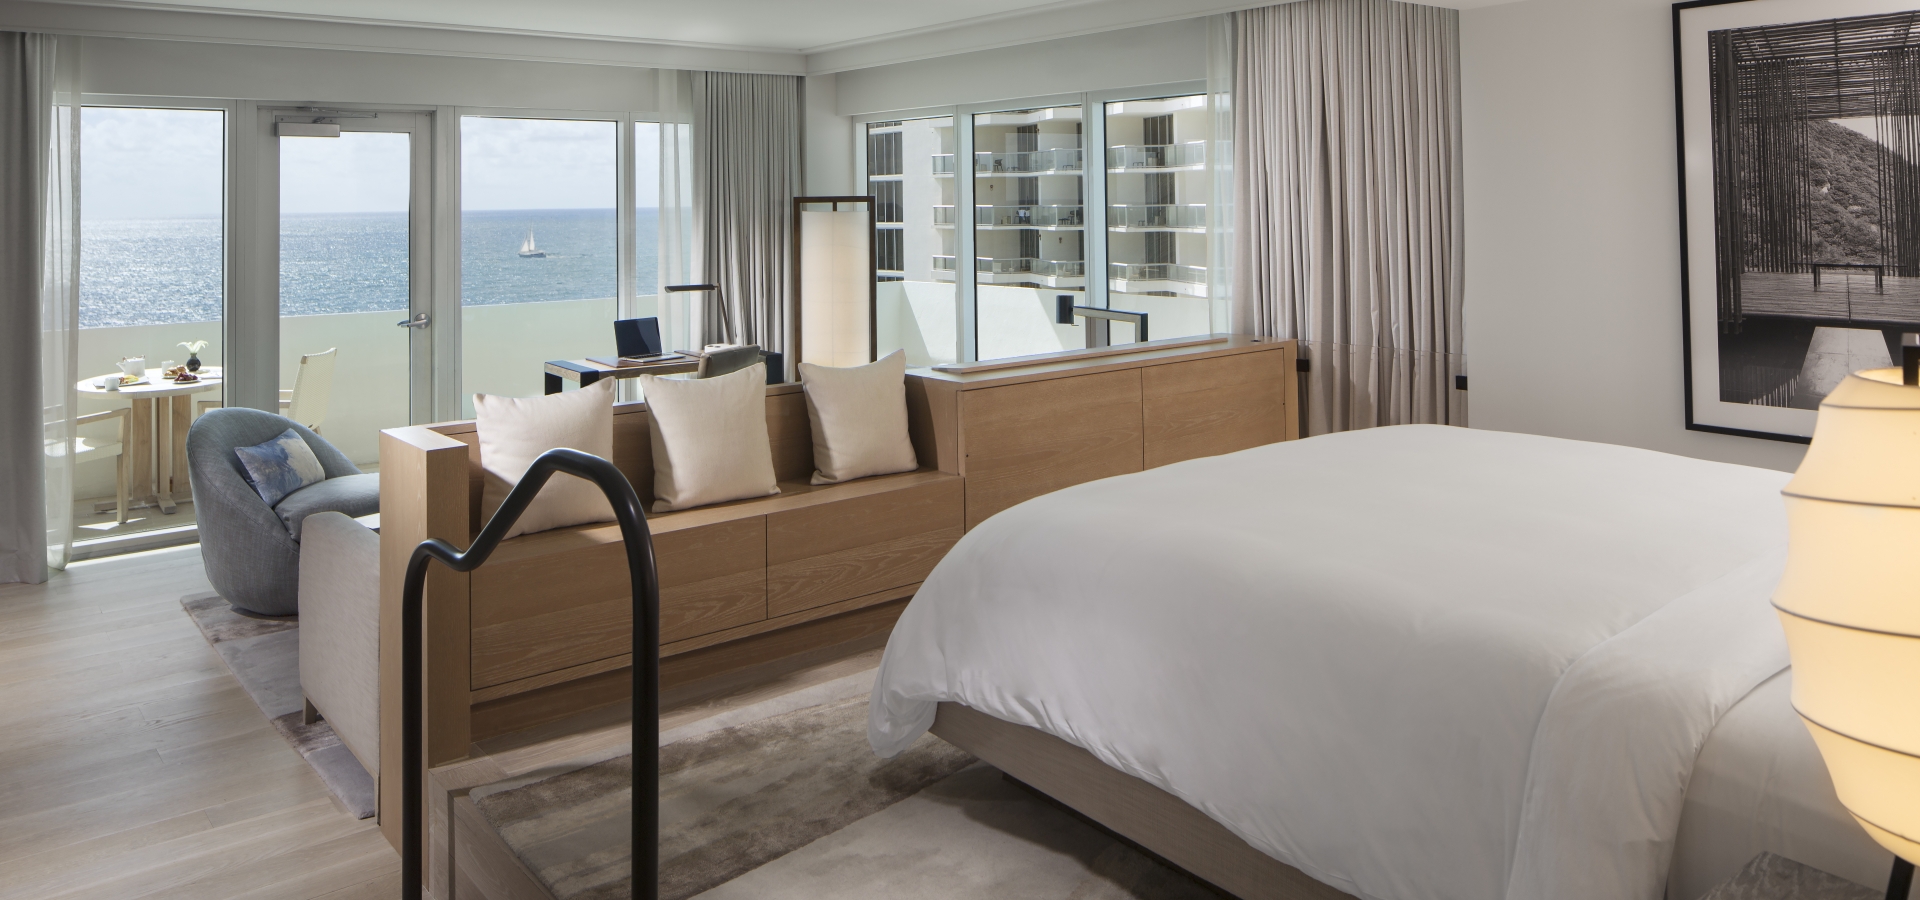 A suite at Eden Roc, Miami Beach